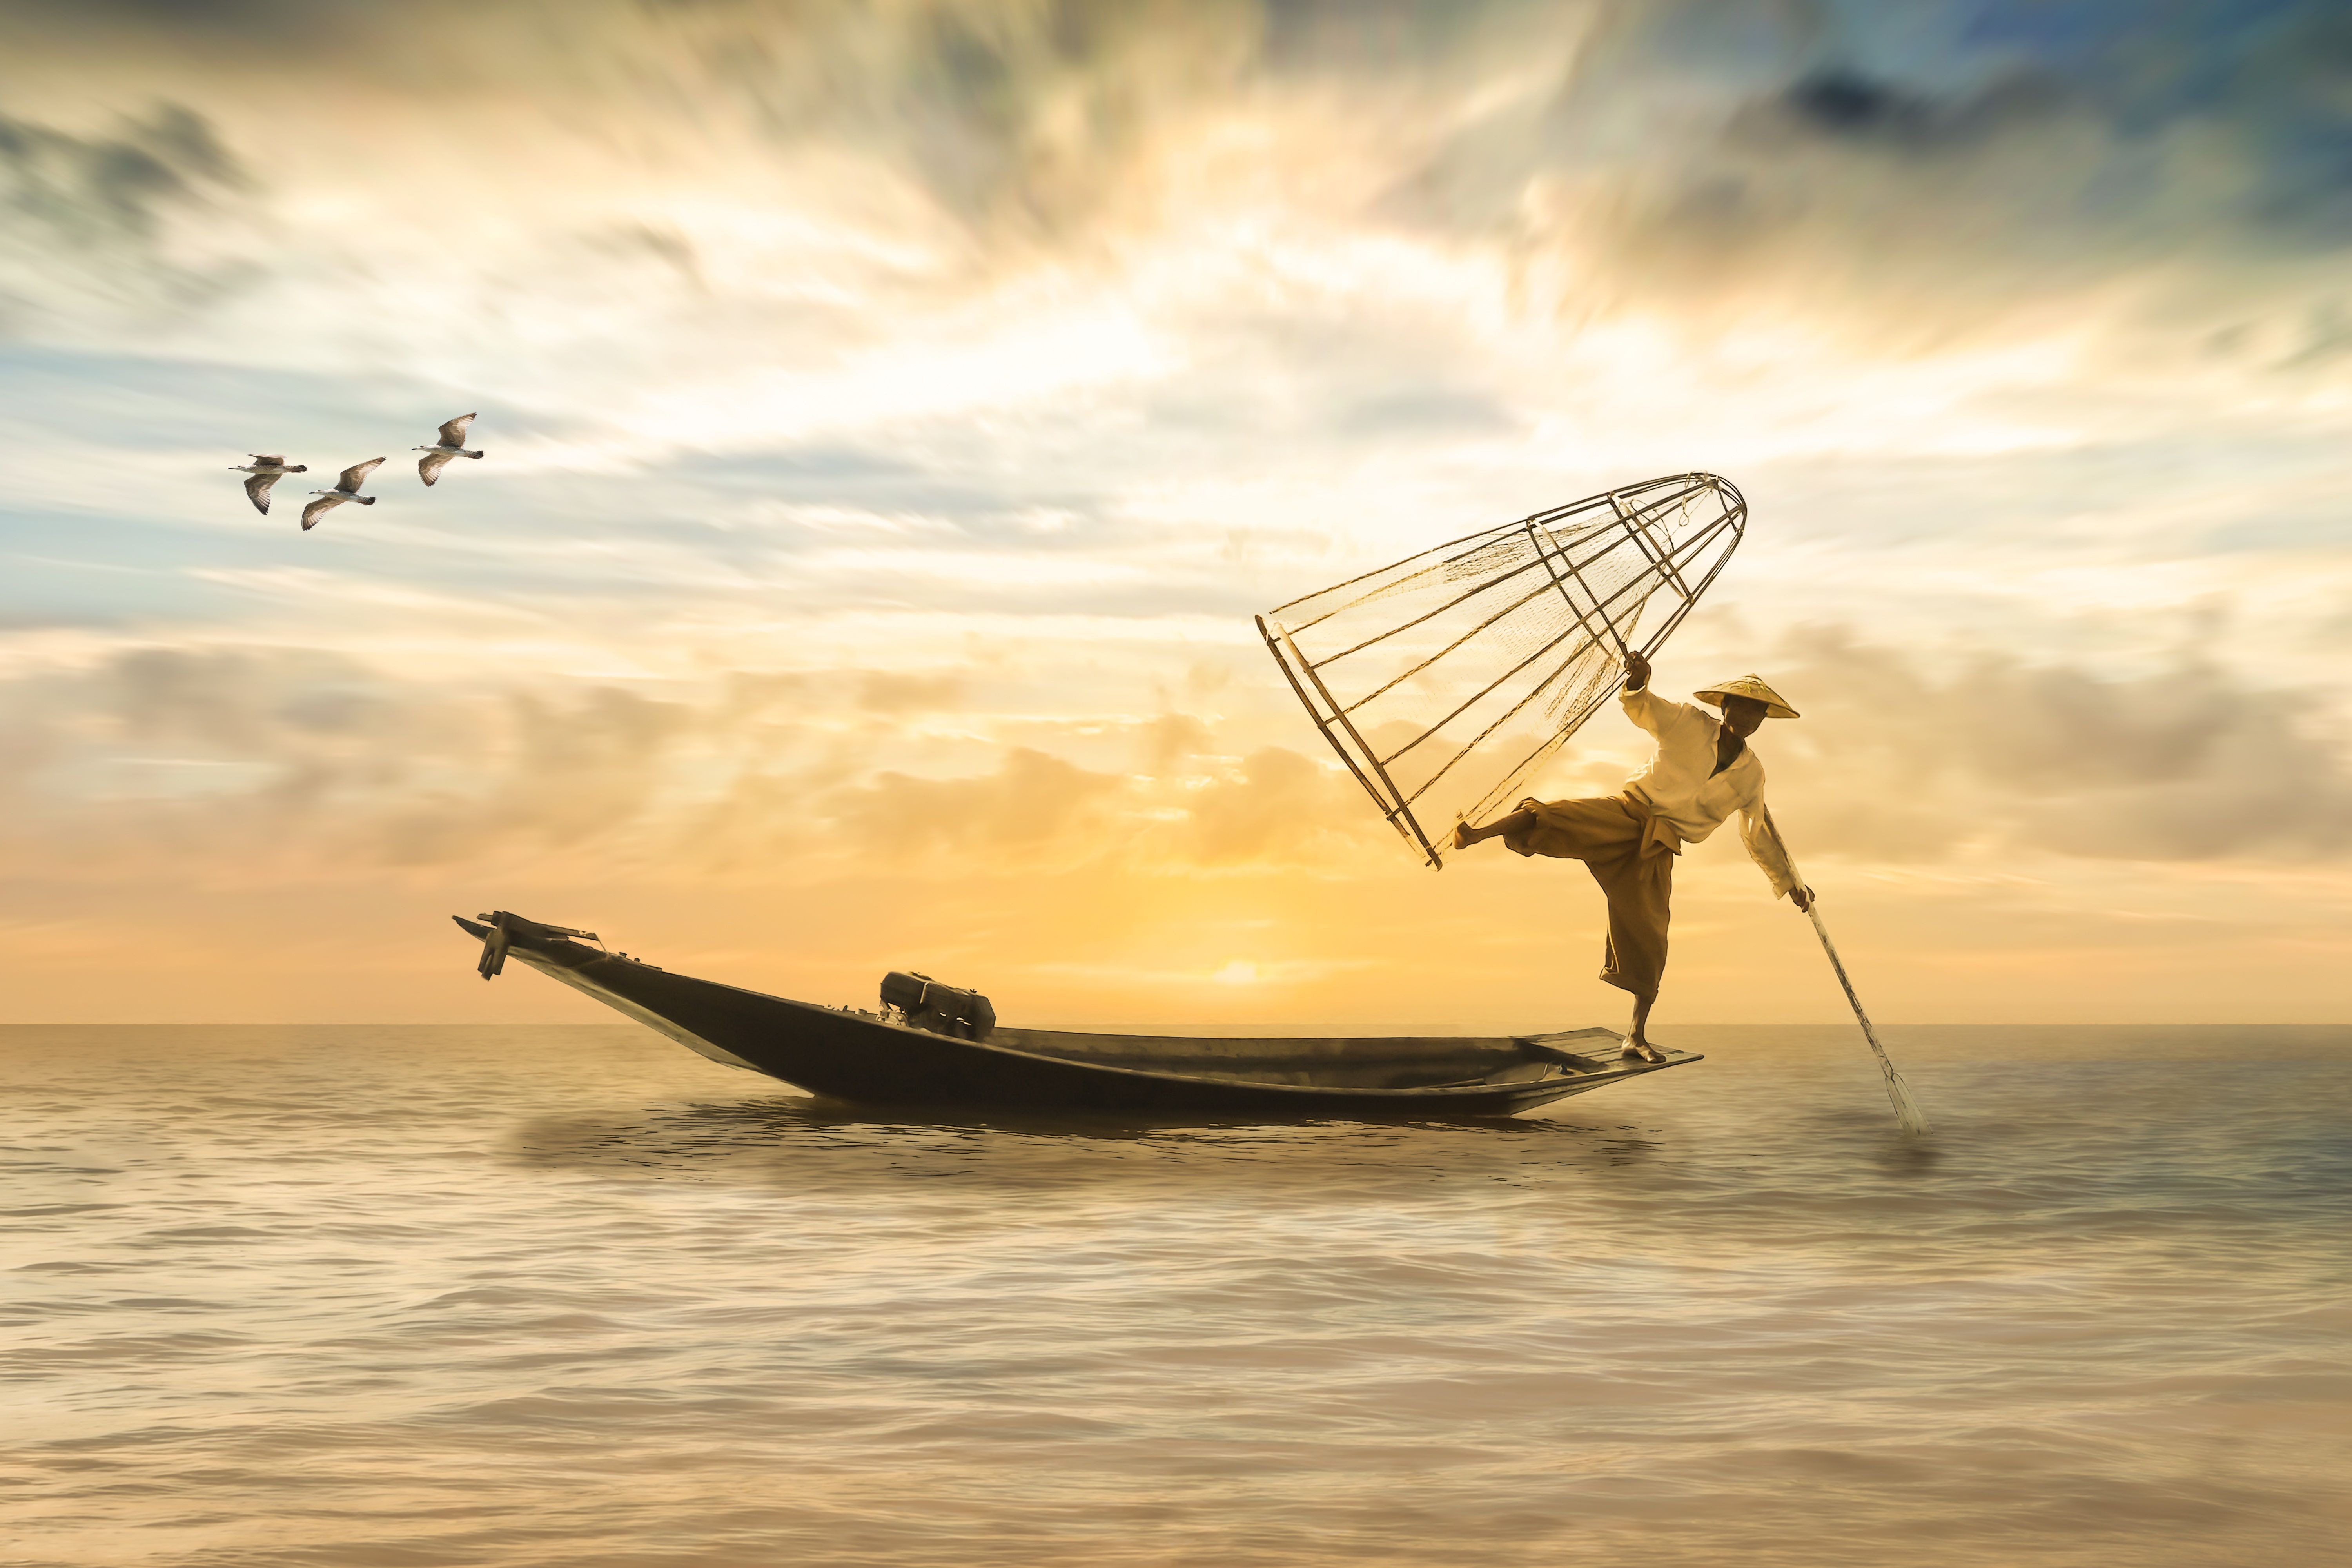 Fisherman Fishing Boat, HD Others, 4k Wallpaper, Image